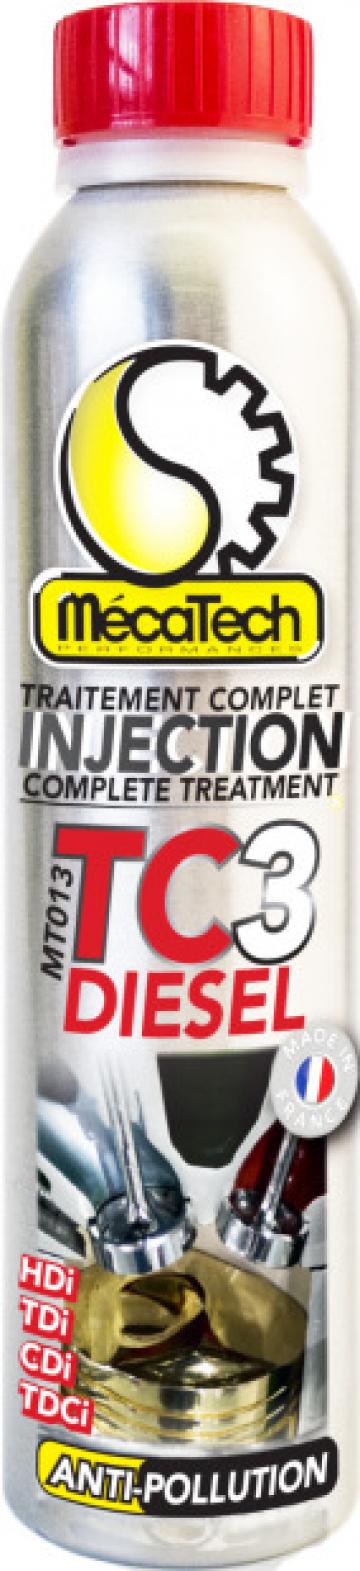 Solutie curatare injectoare - TC3 diesel (300ml)